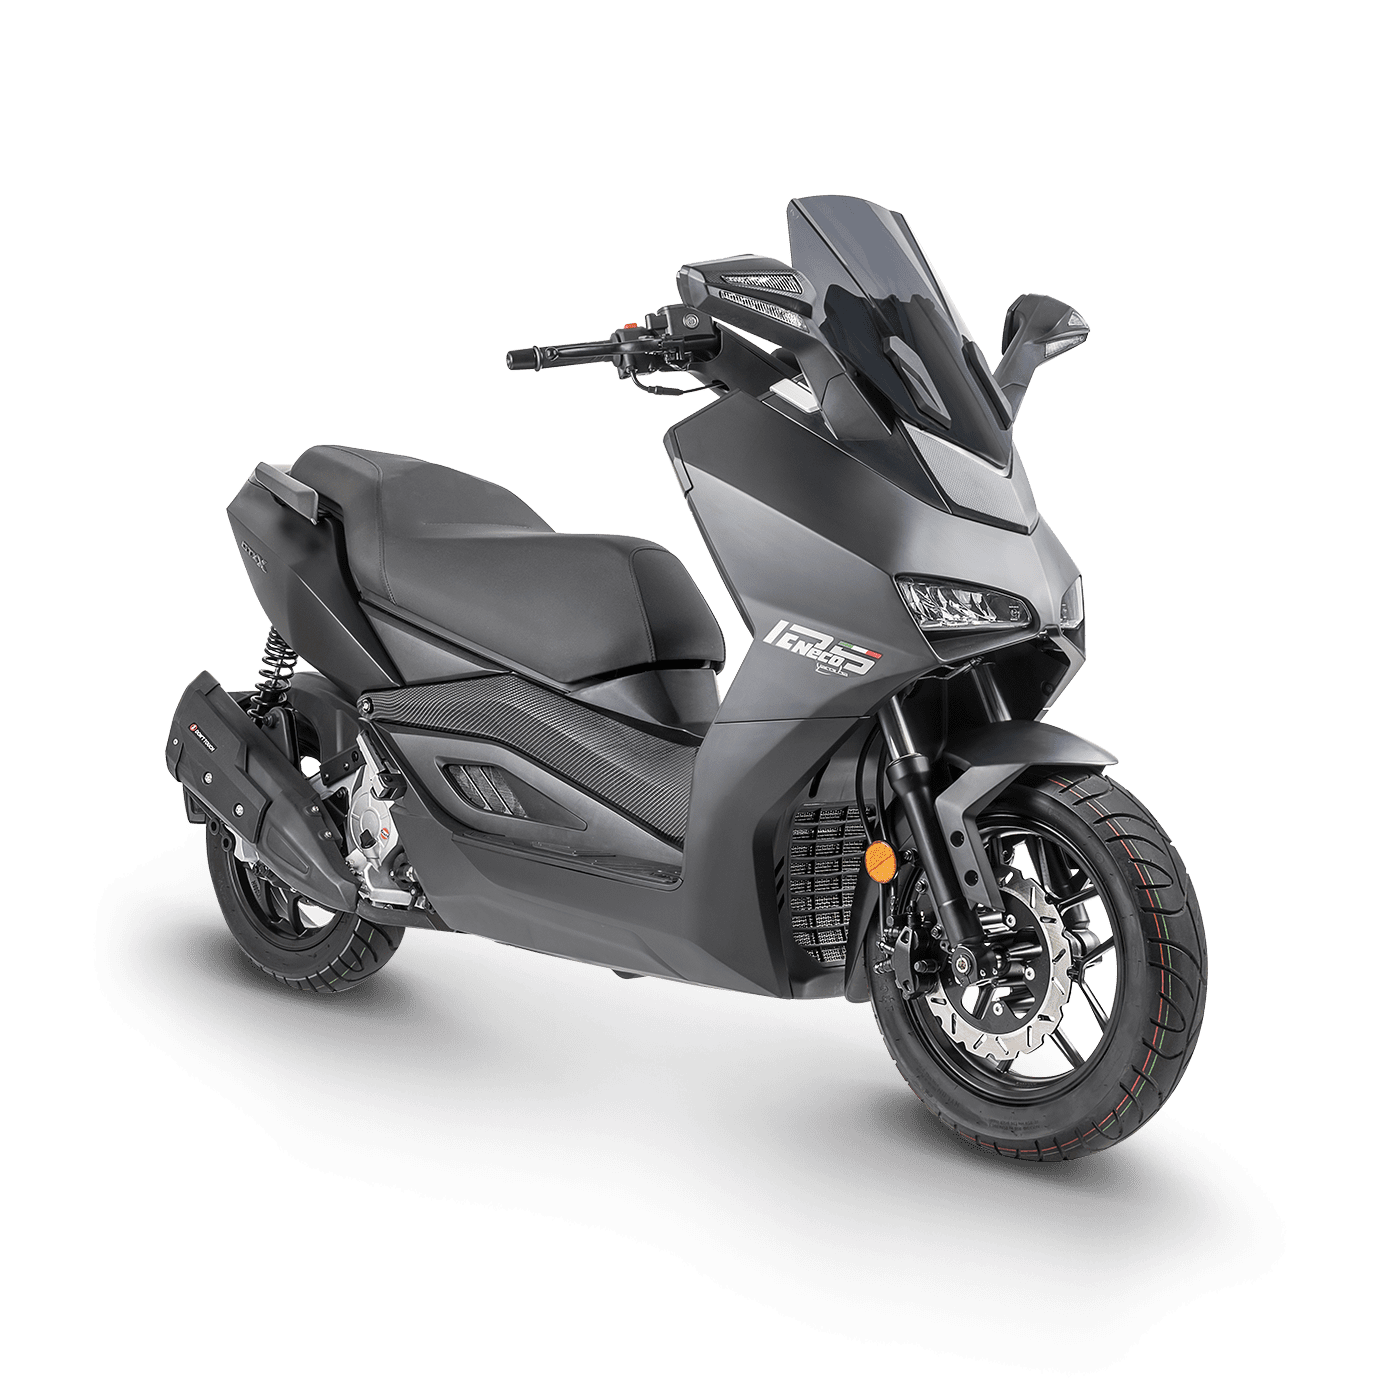 Home BNL - NECO Motorcycles